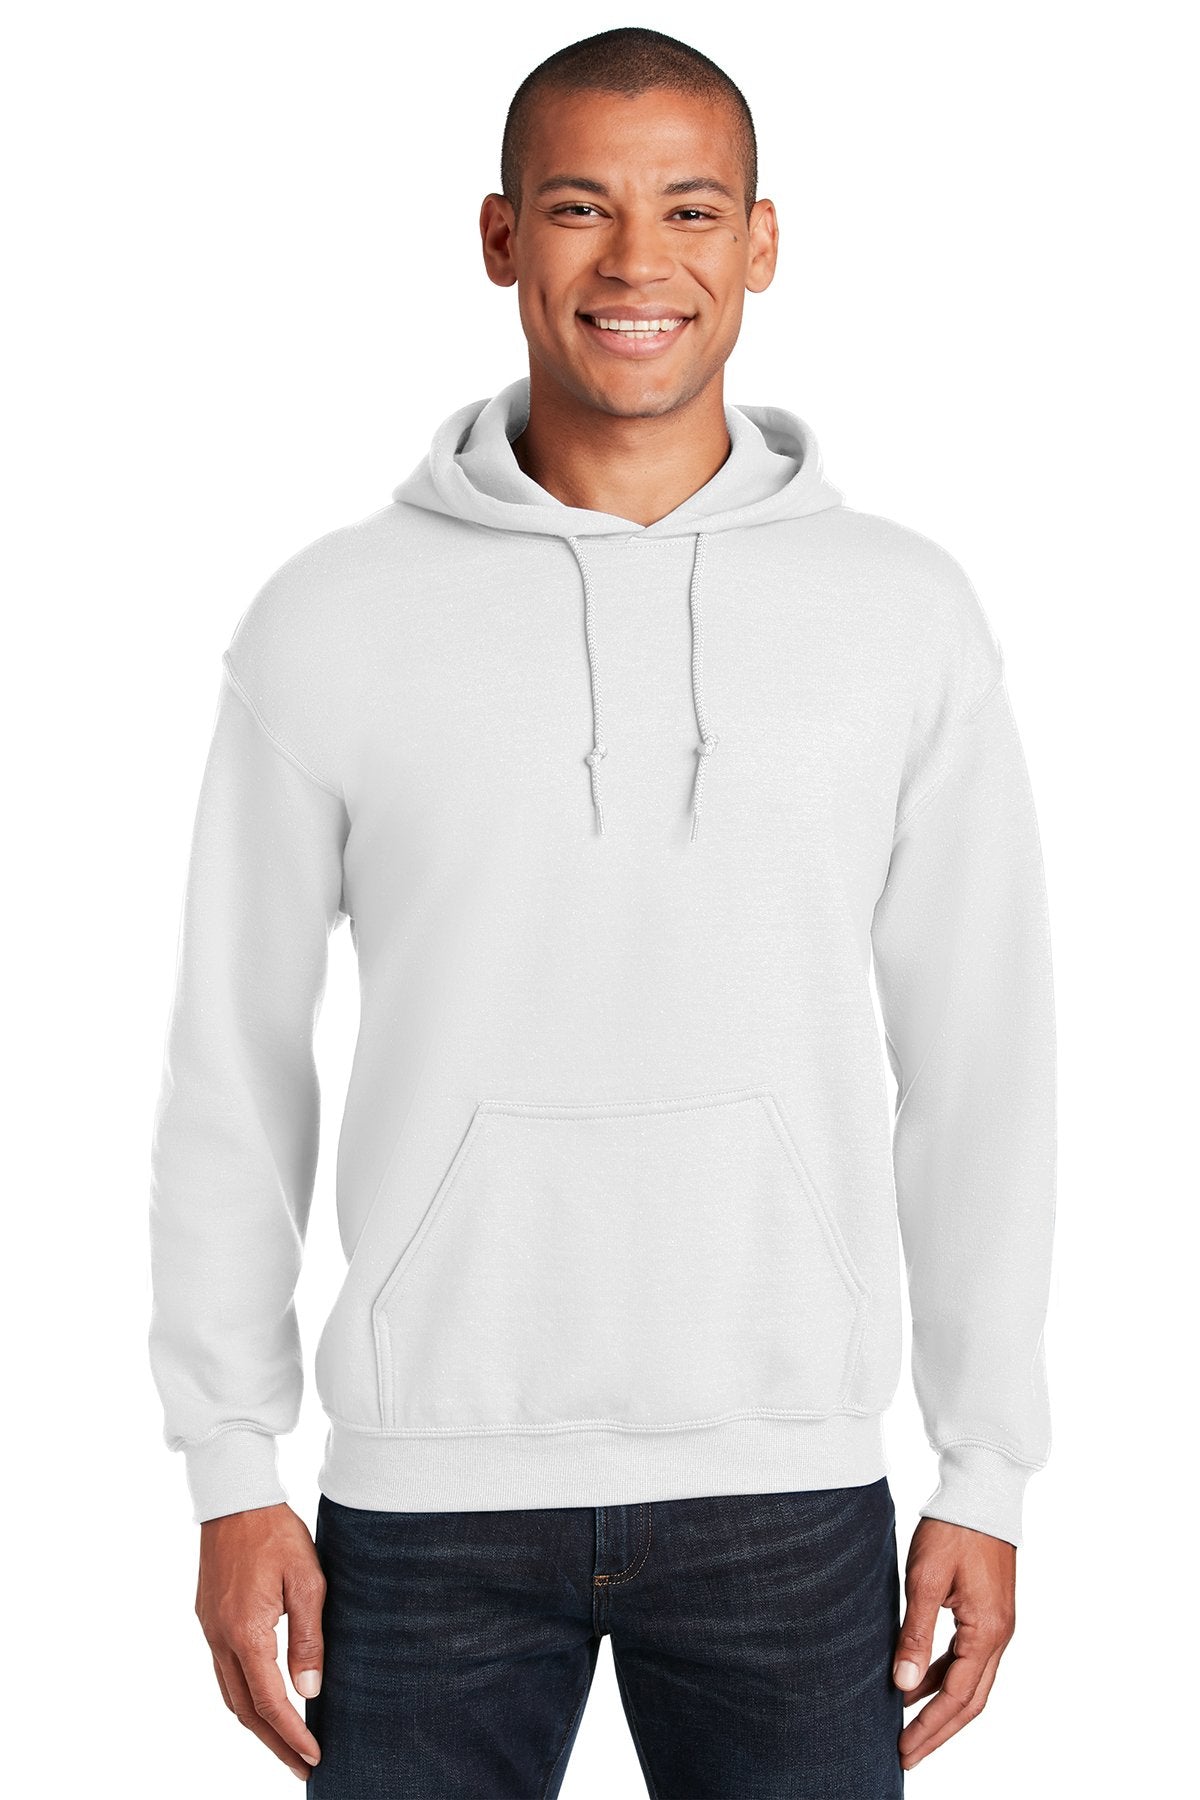 Gildan White 18500 sweatshirts with logos